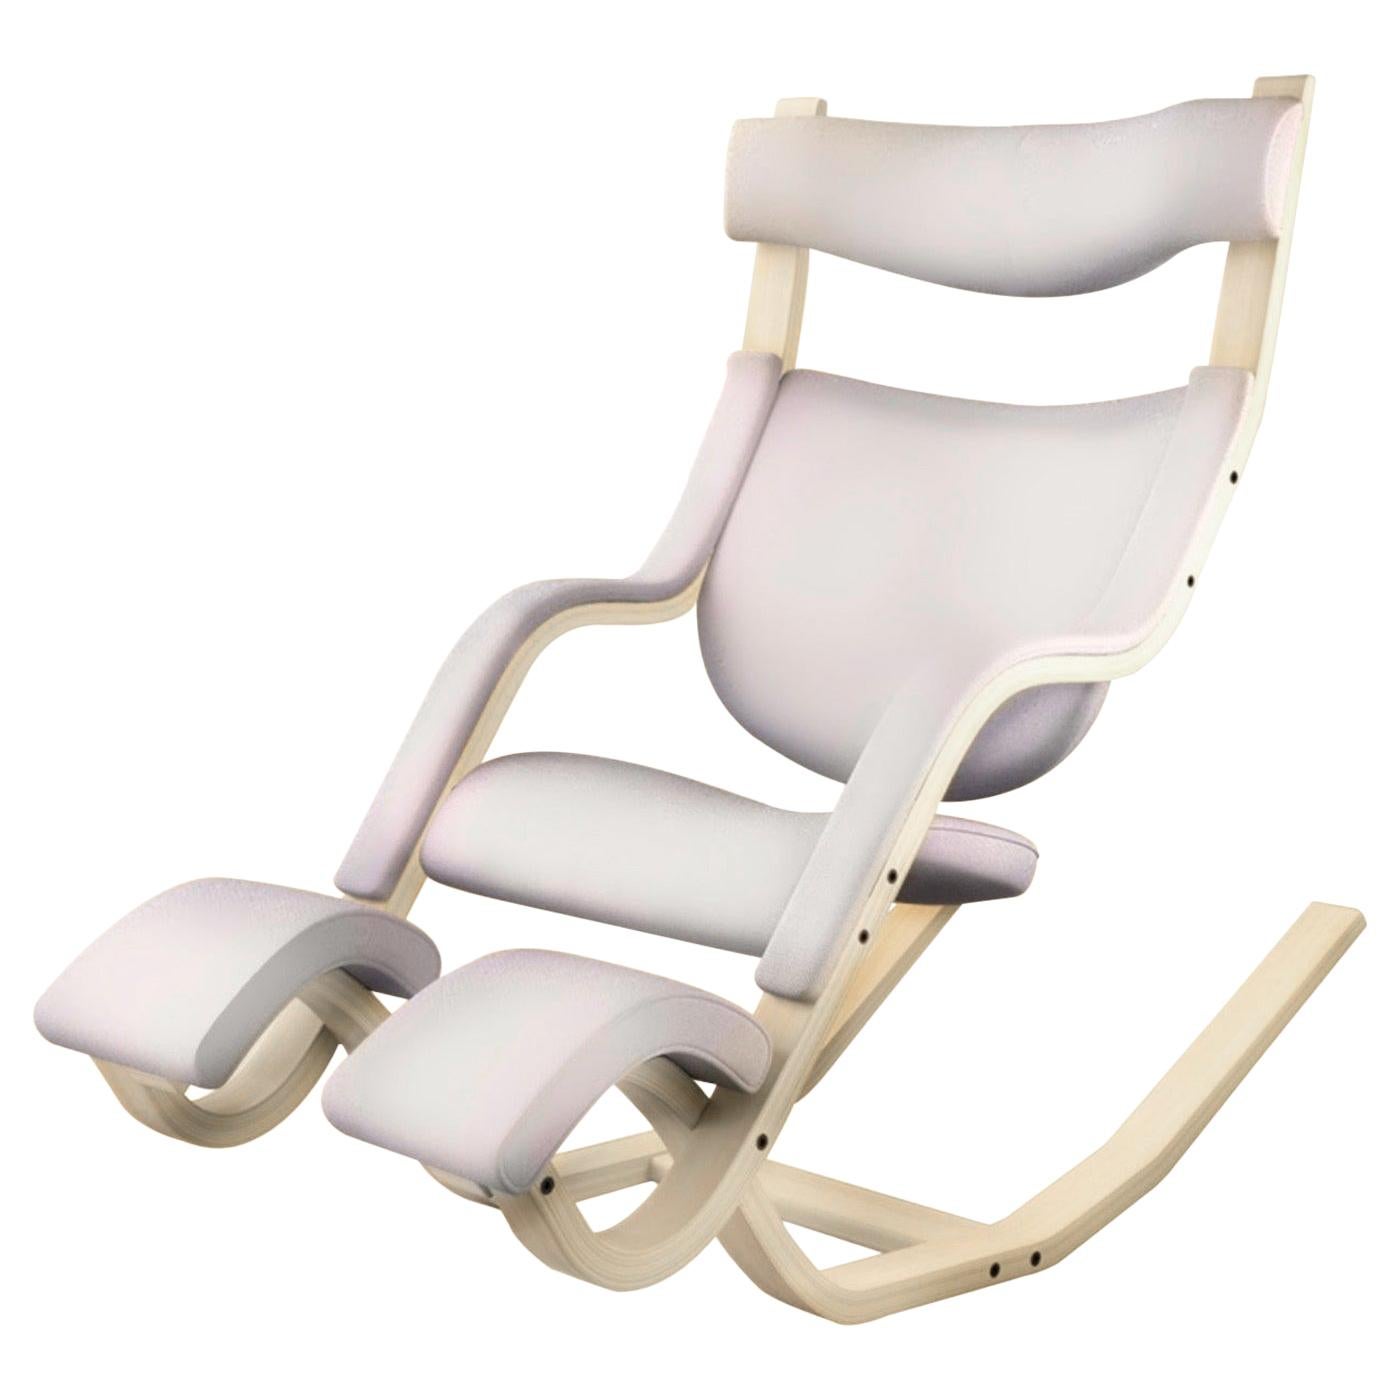 Varier Stokke Gravity Balans Chair, Custom White Leather and Beach, Peter Opsvik